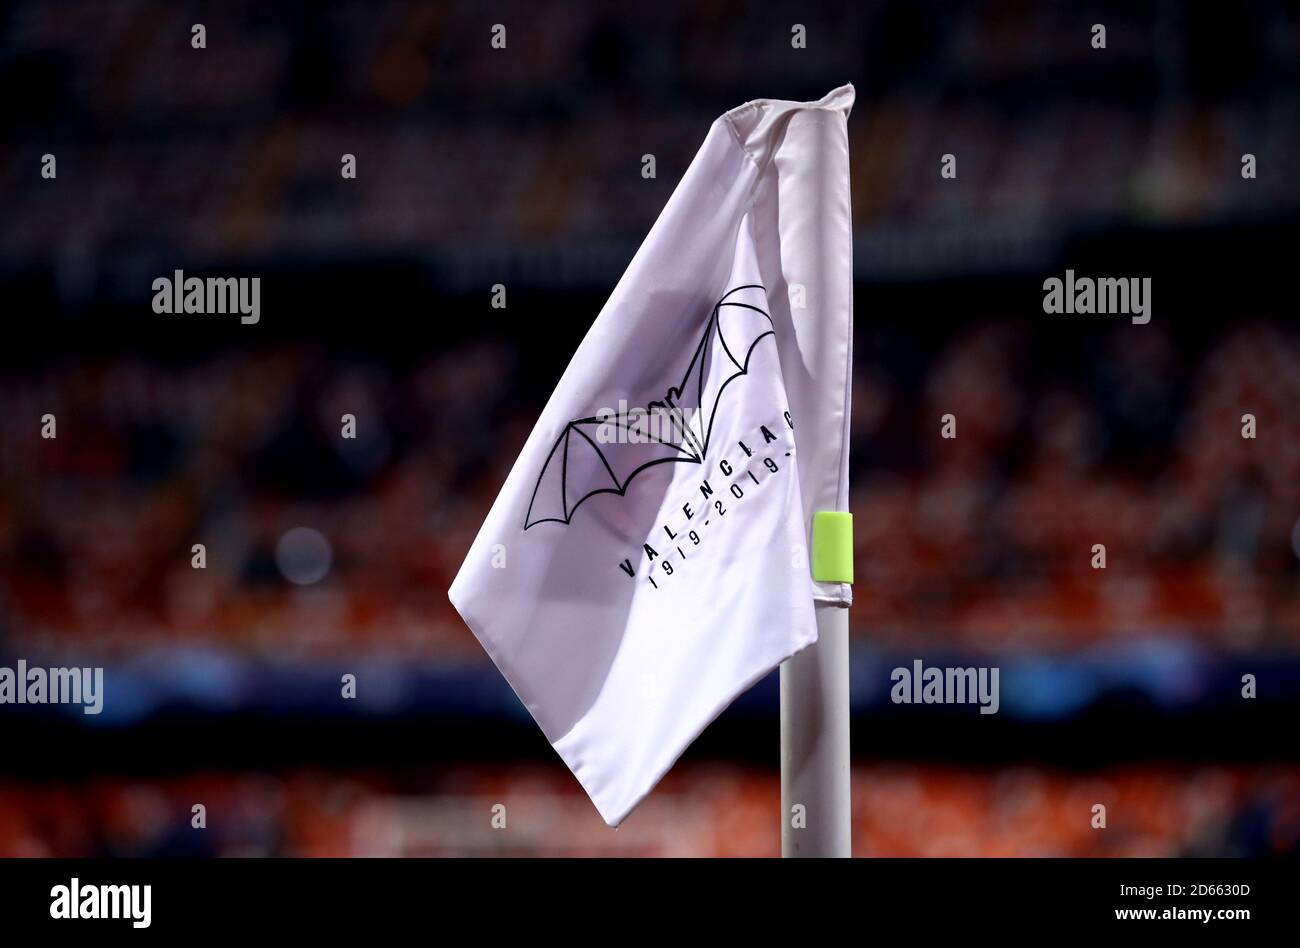 The Valencia club crest on a corner flag Stock Photo